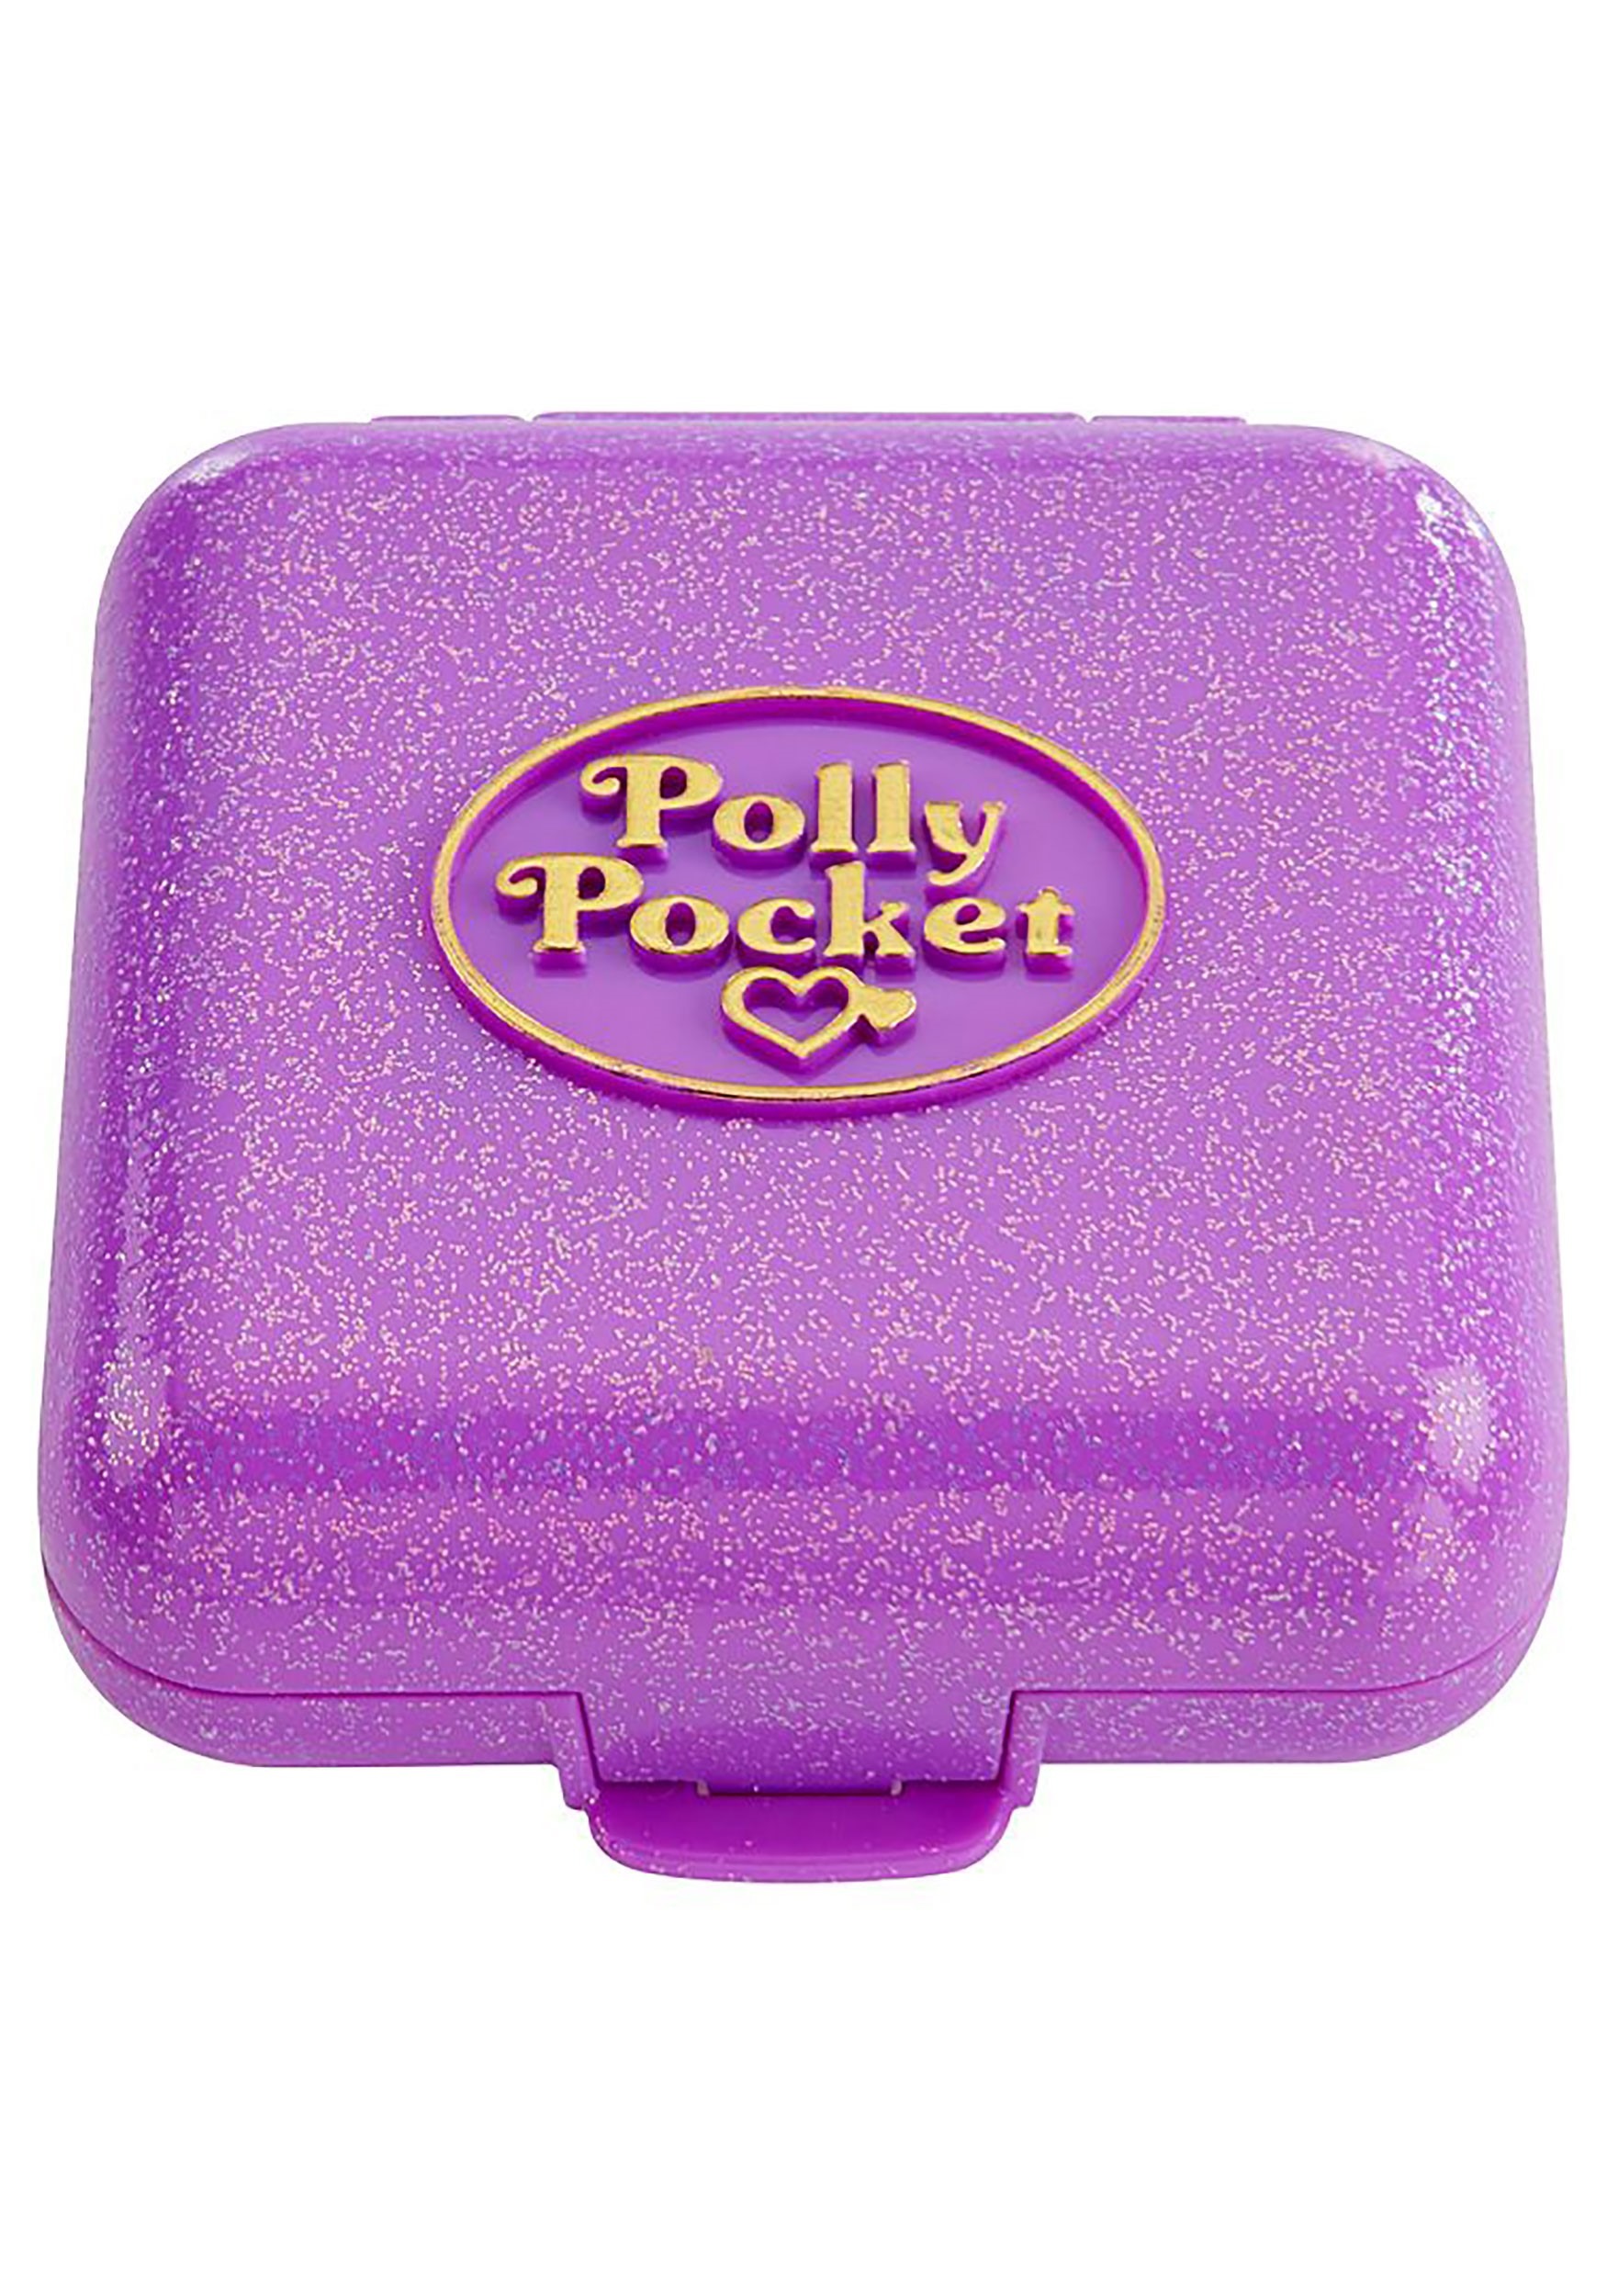 polly pocket 30th anniversary pre order